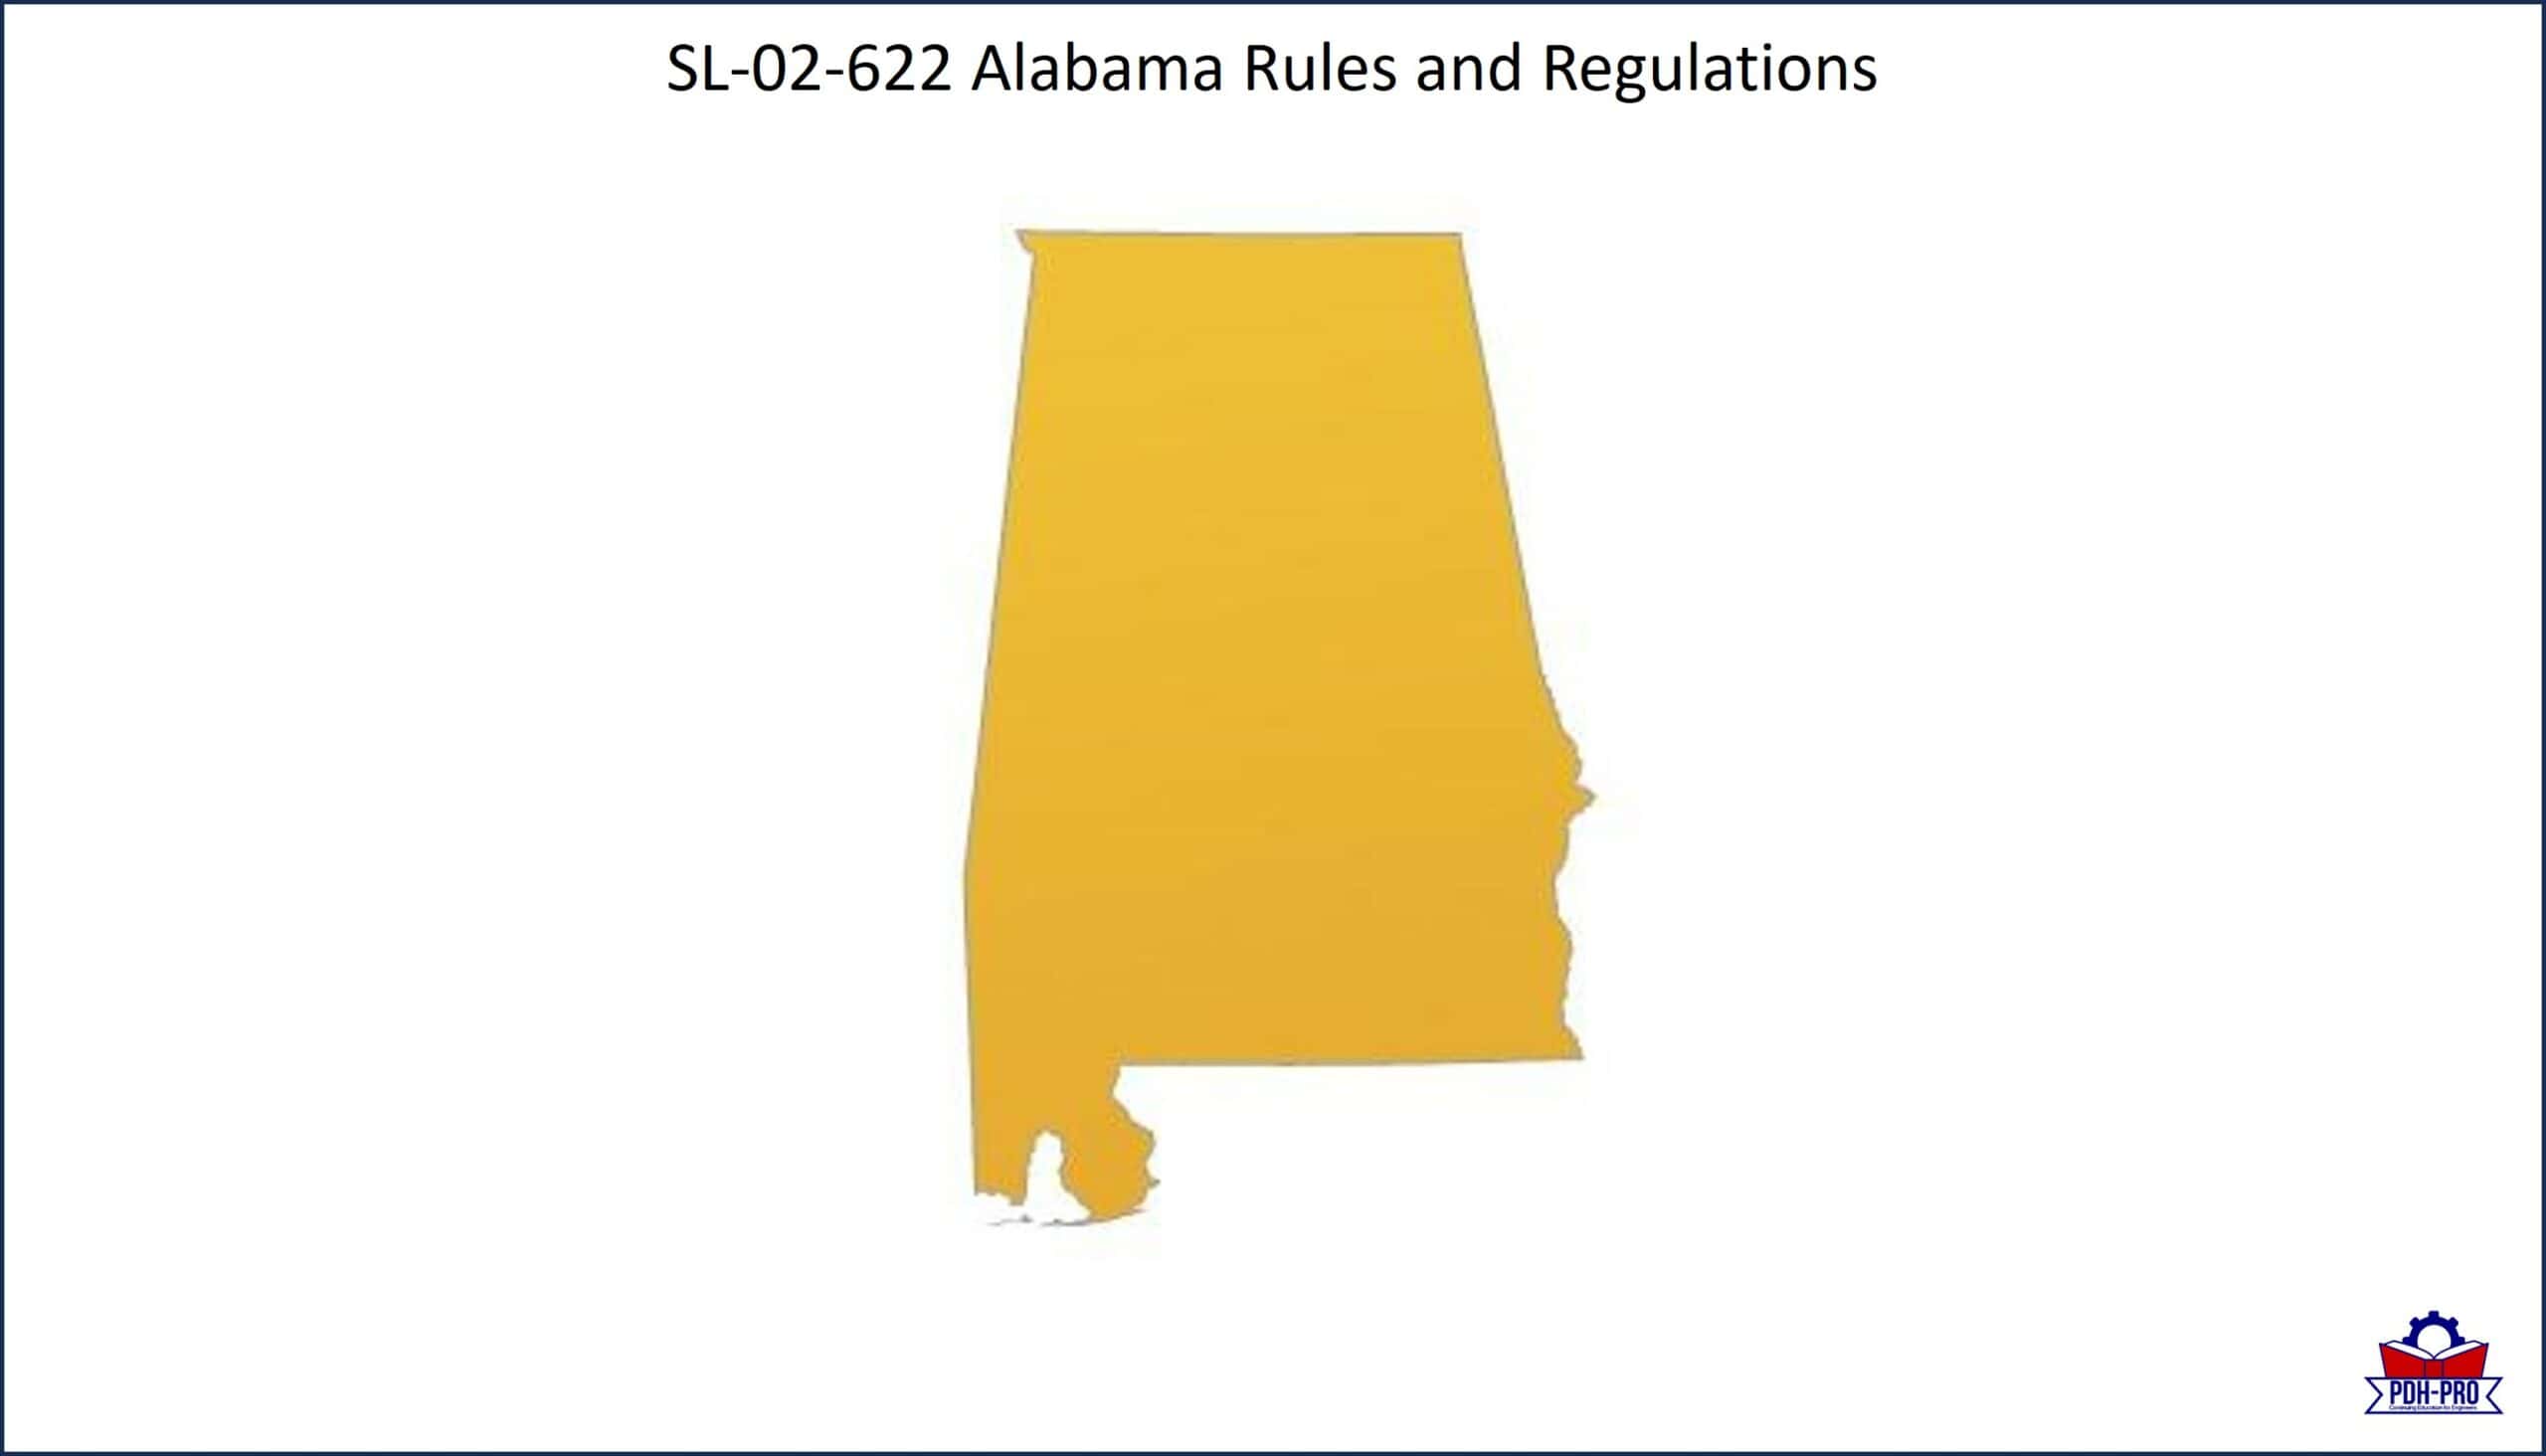 Alabama Rules and Regulations